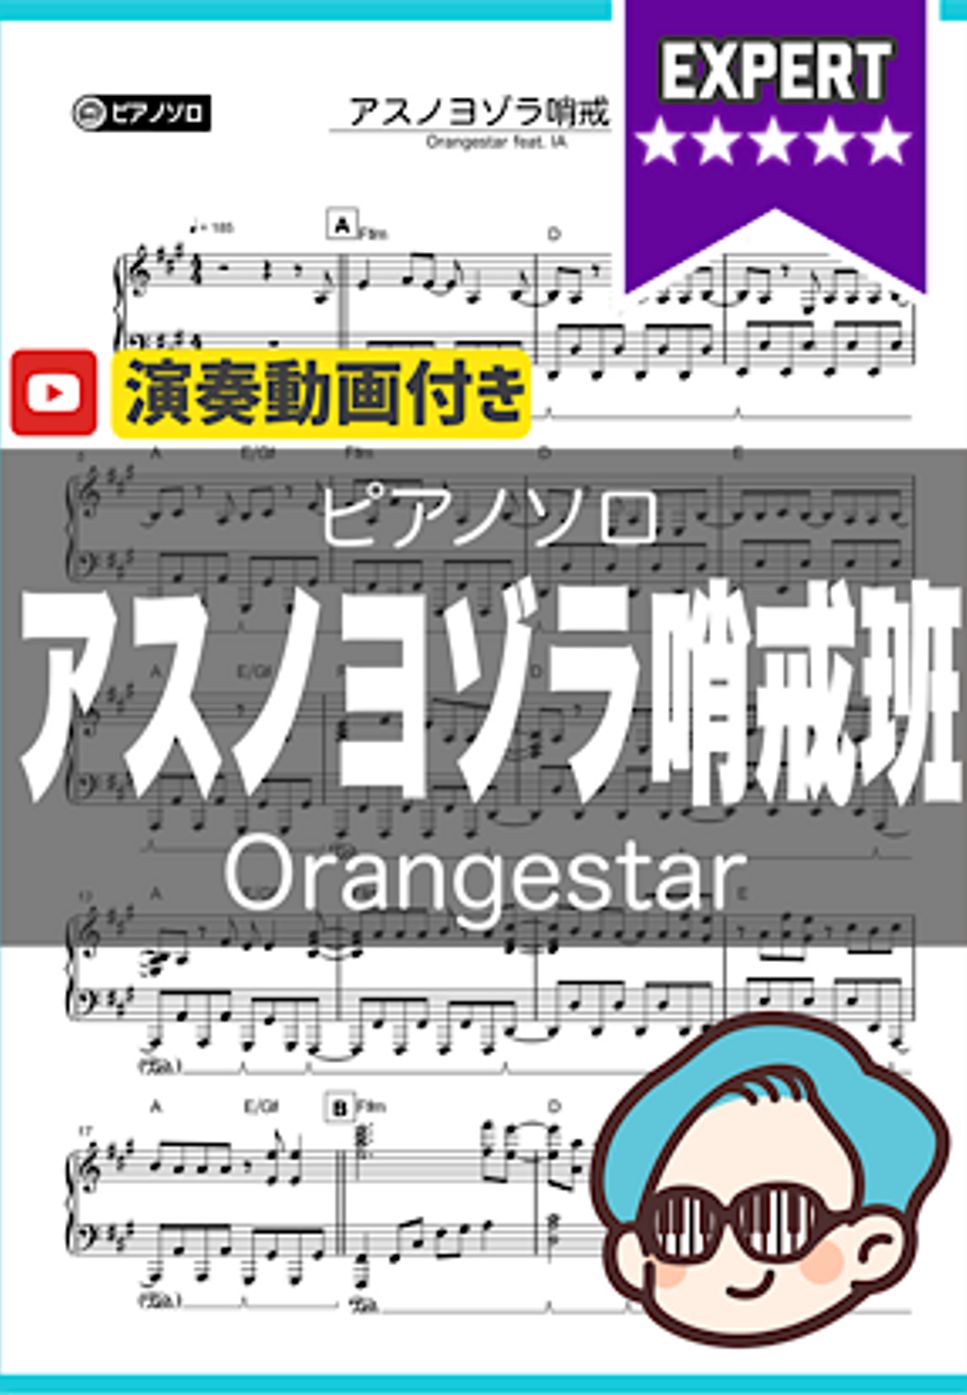 Orangestar(feat.IA) - アスノヨゾラ哨戒班 by シータピアノ